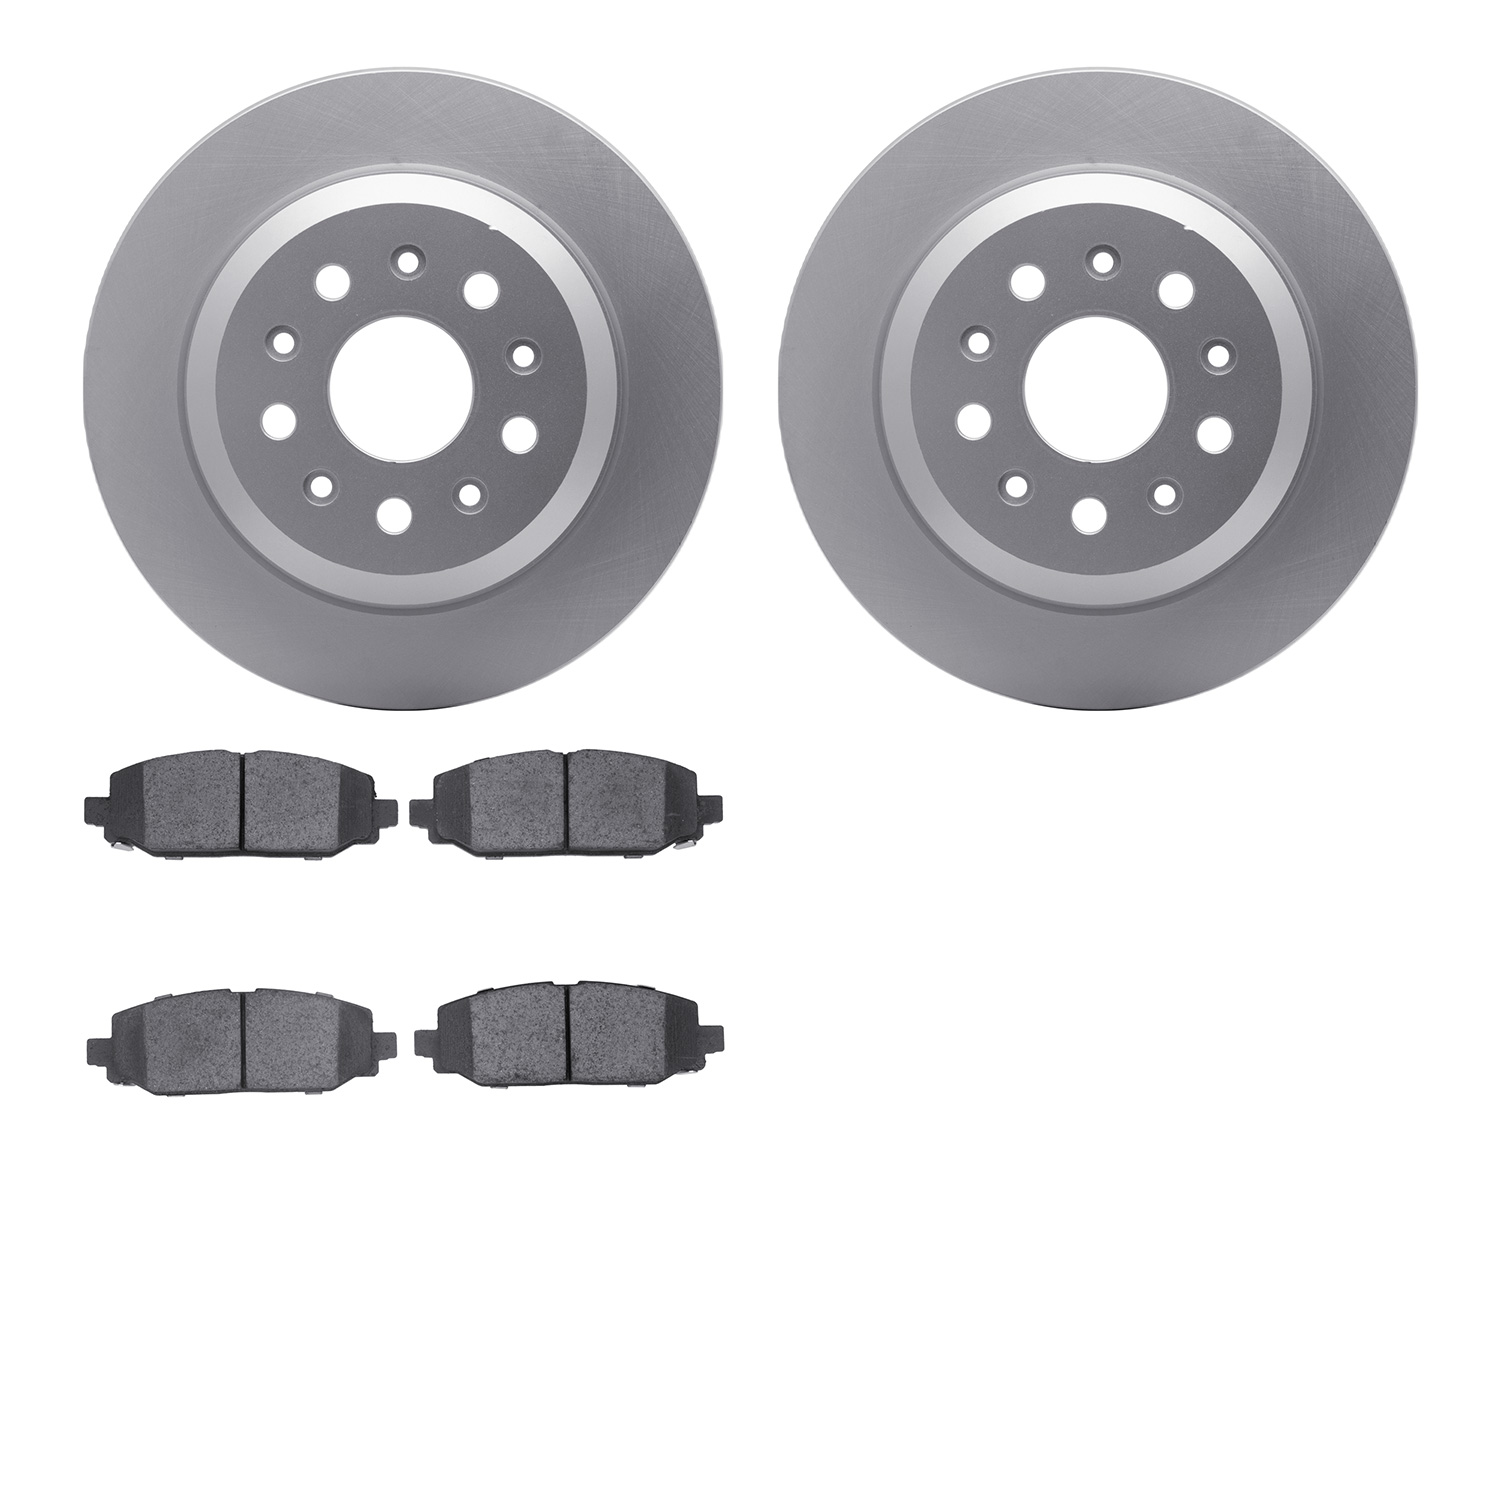 4402-42033 Geospec Brake Rotors with Ultimate-Duty Brake Pads Kit, Fits Select Mopar, Position: Rear